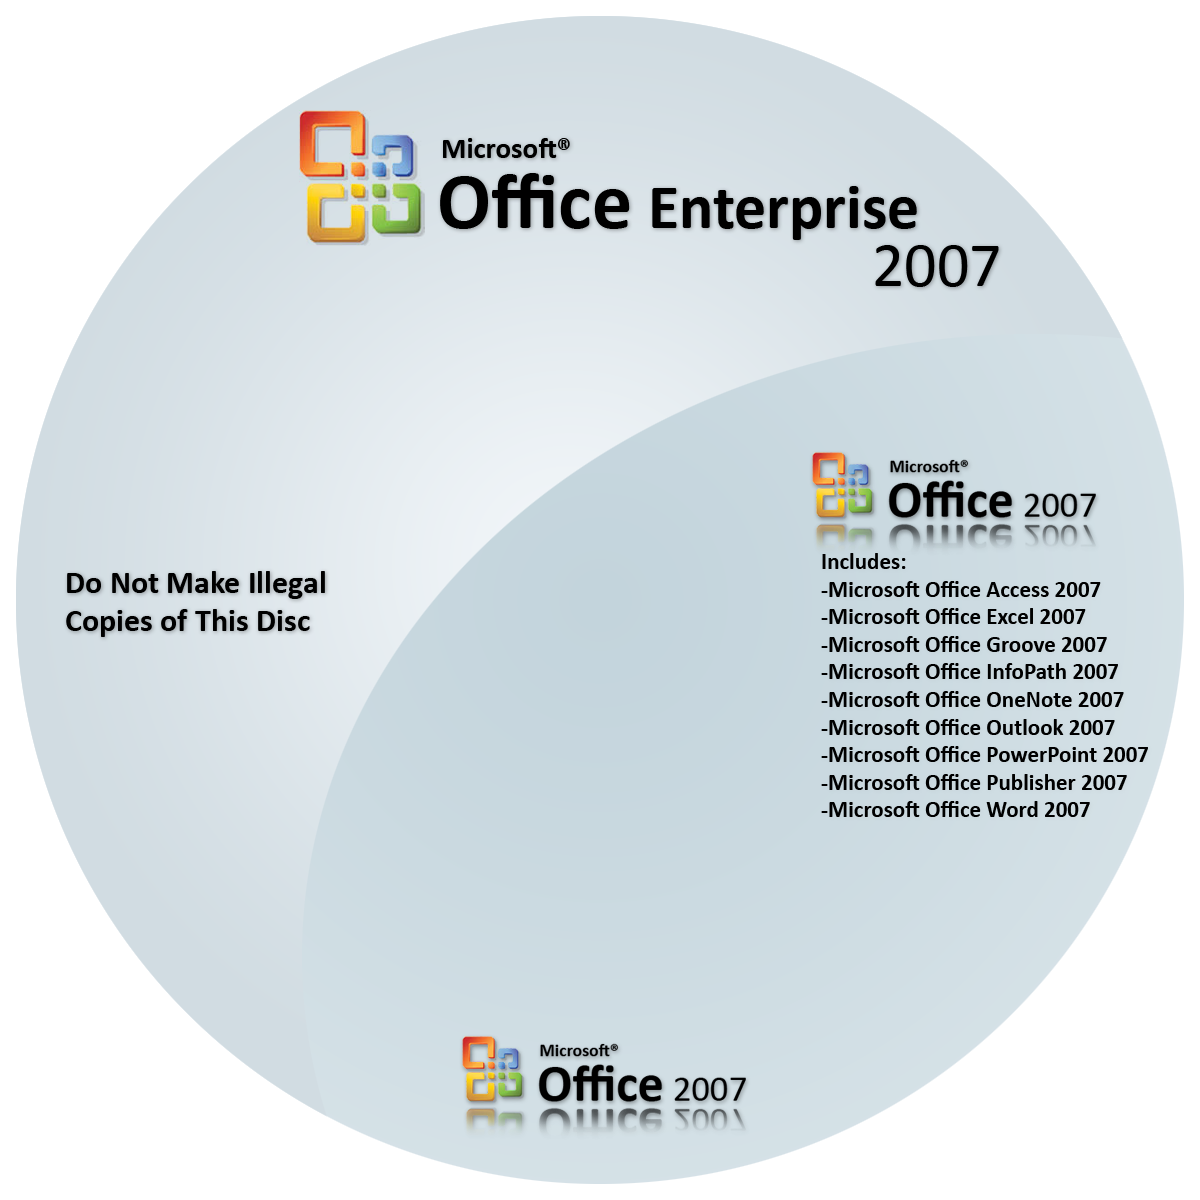 Microsoft Office Enterprise 2007 What Is It